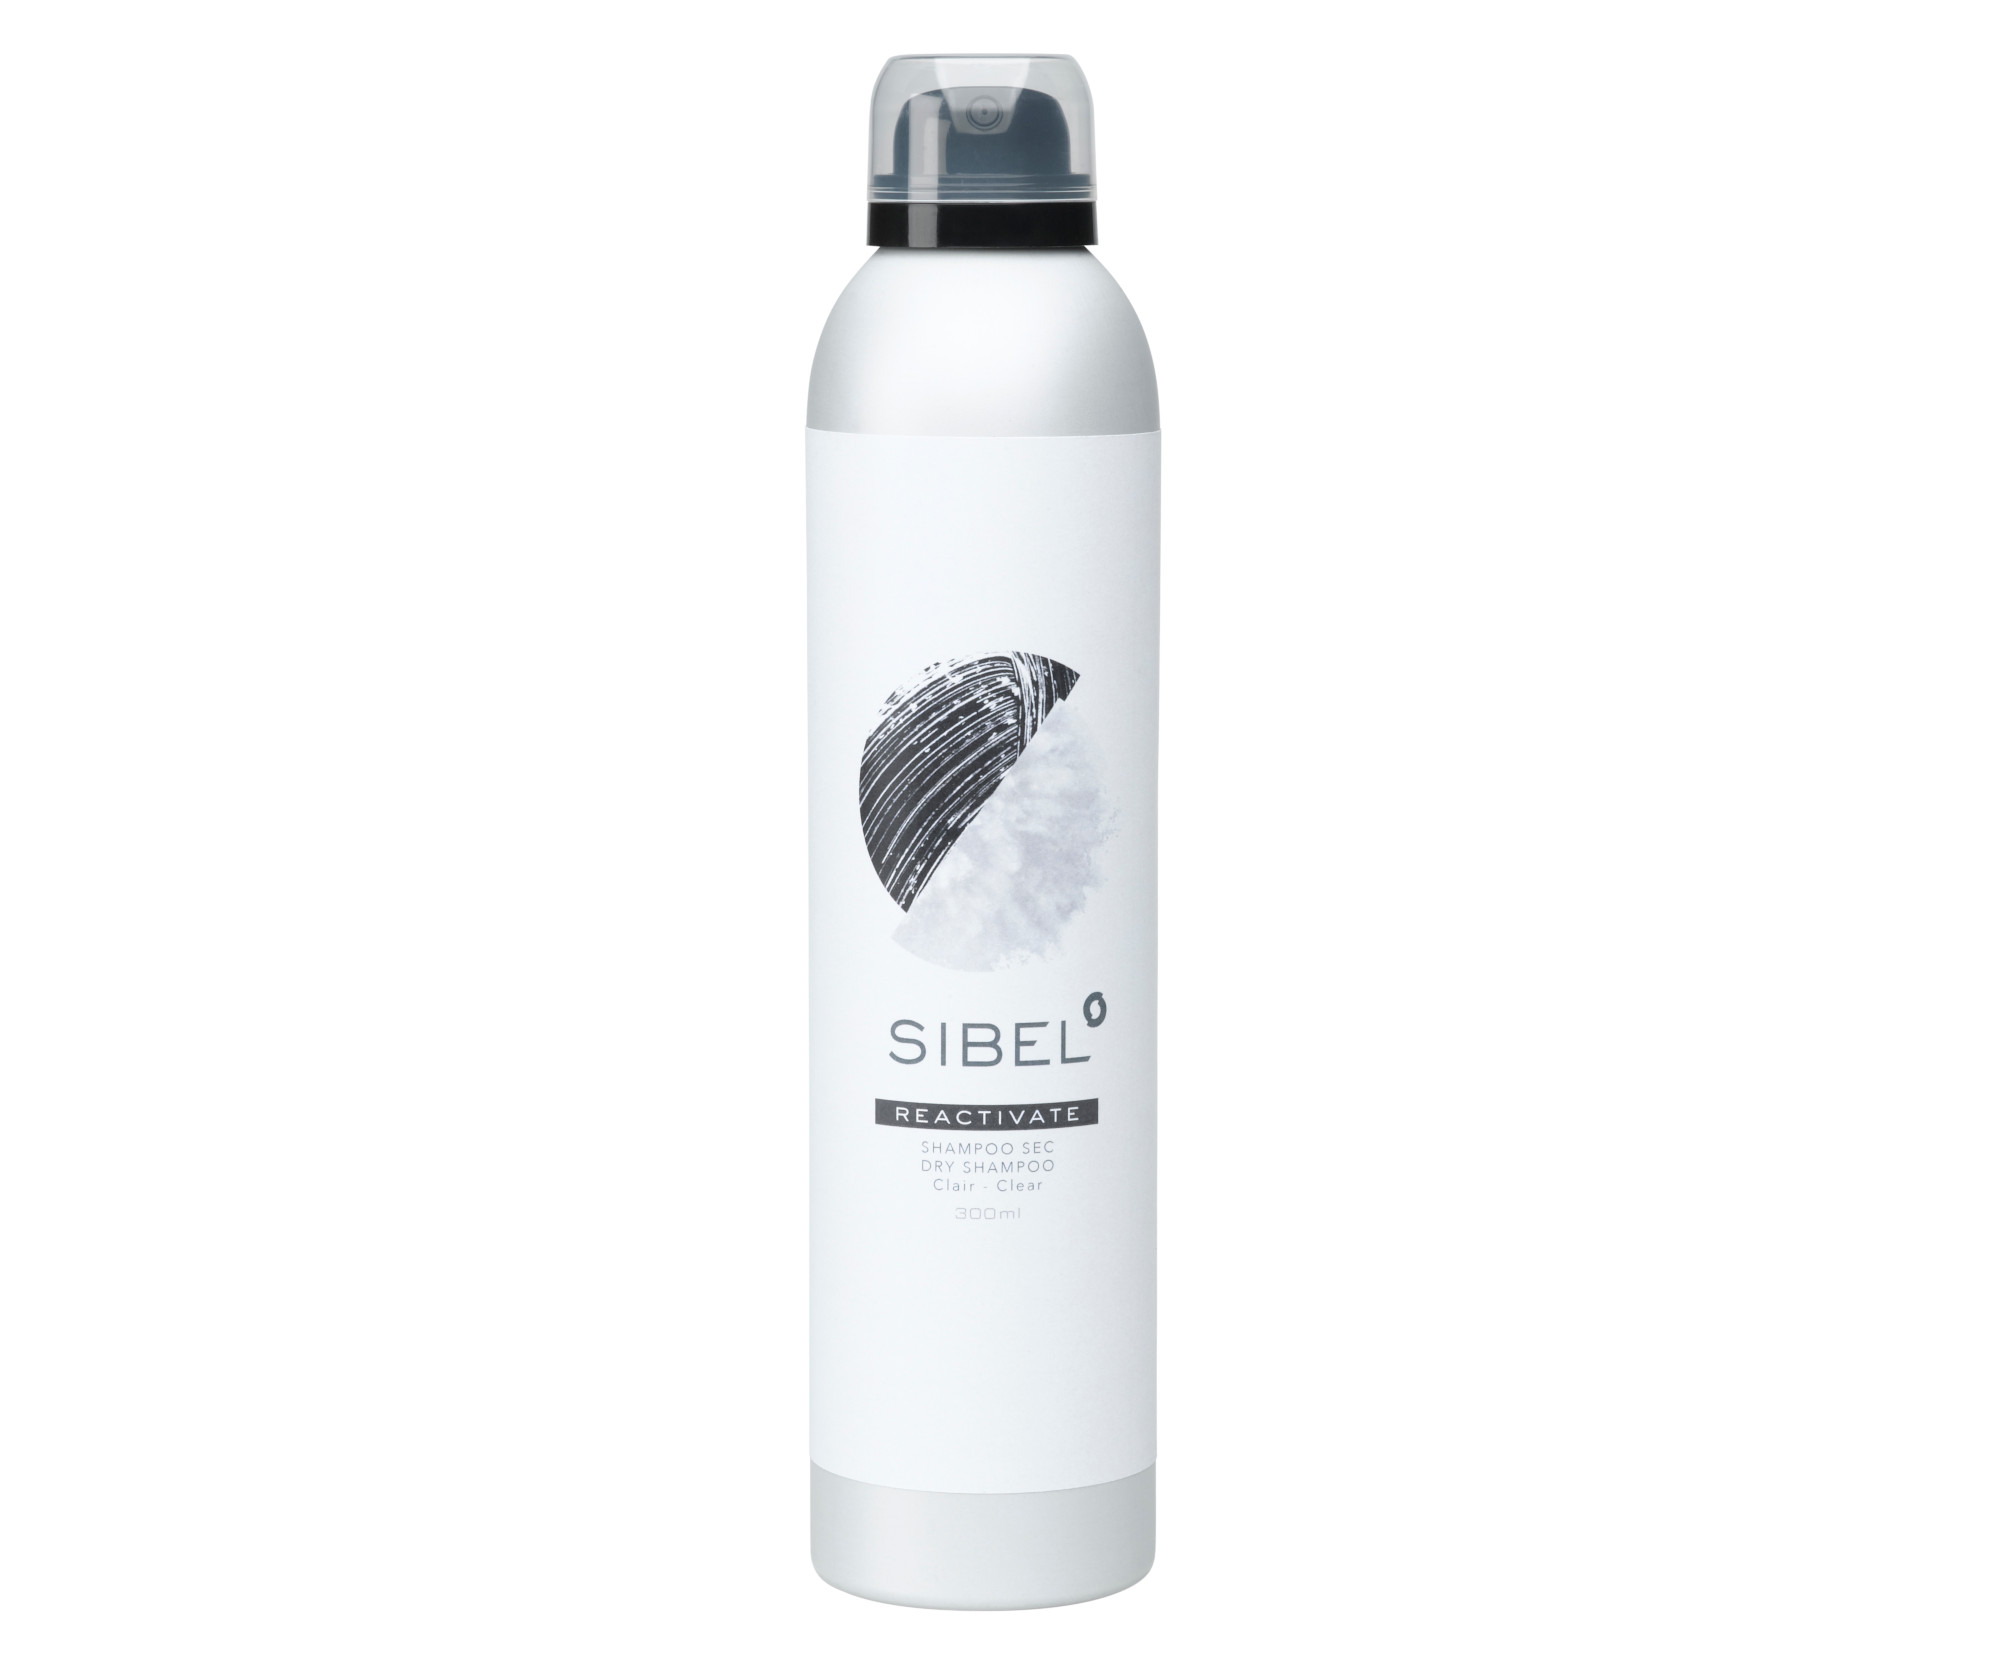 Suchý šampon Sibel Reactivate - 300 ml (8800100) + DÁREK ZDARMA